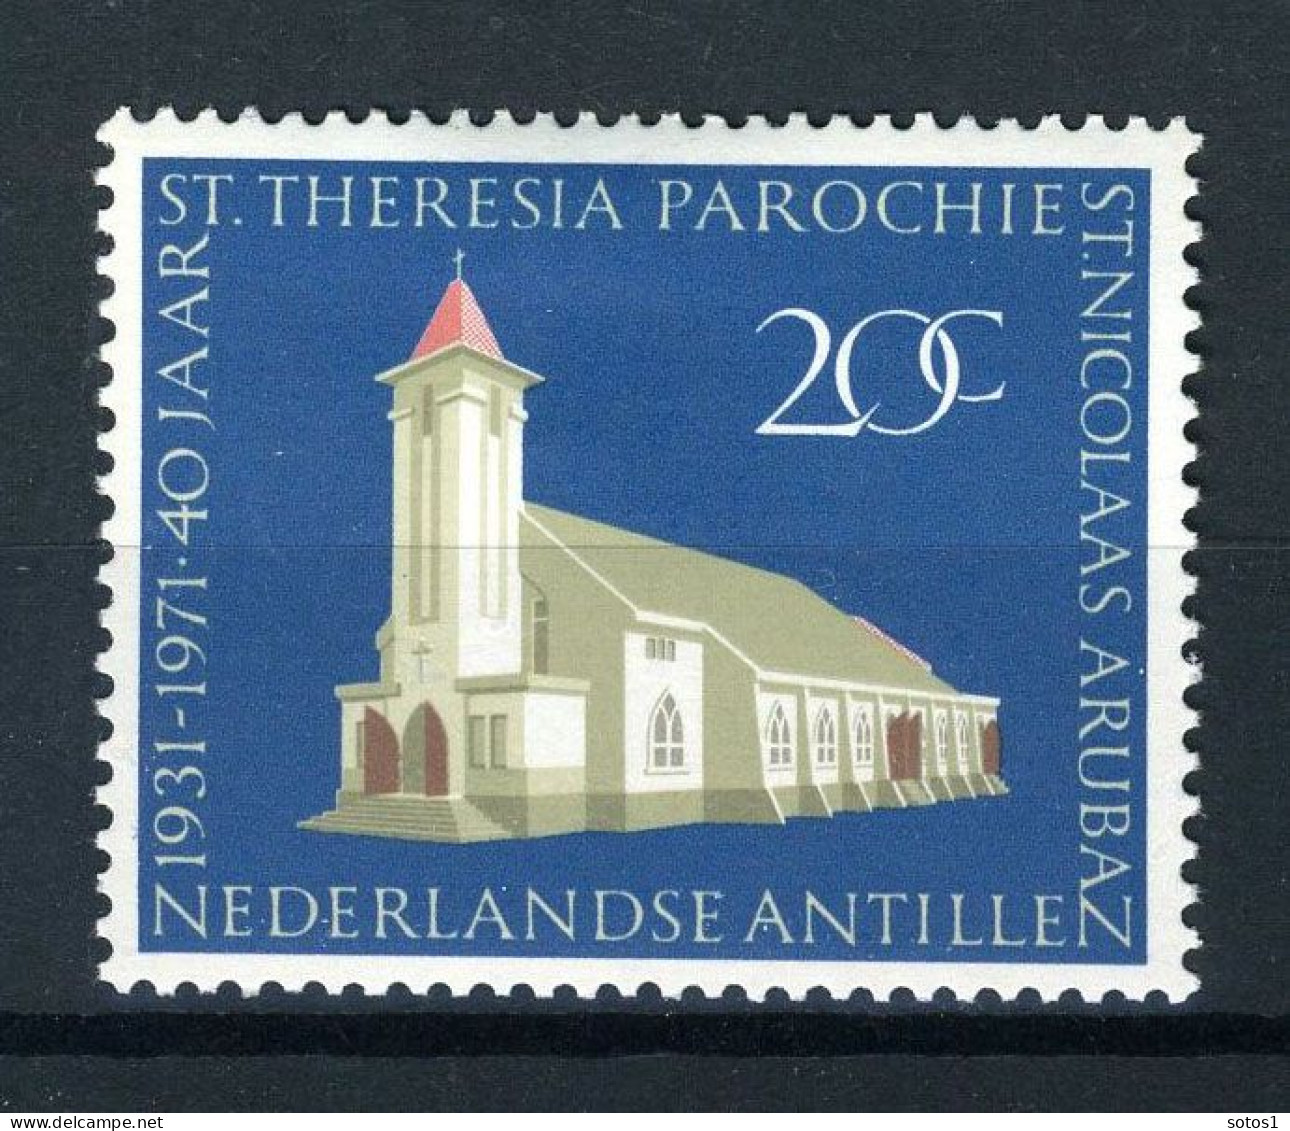 NL. ANTILLEN 434 MH 1971 - 40 Jaar St. Thomas Parochie Aruba. - Curaçao, Antilles Neérlandaises, Aruba